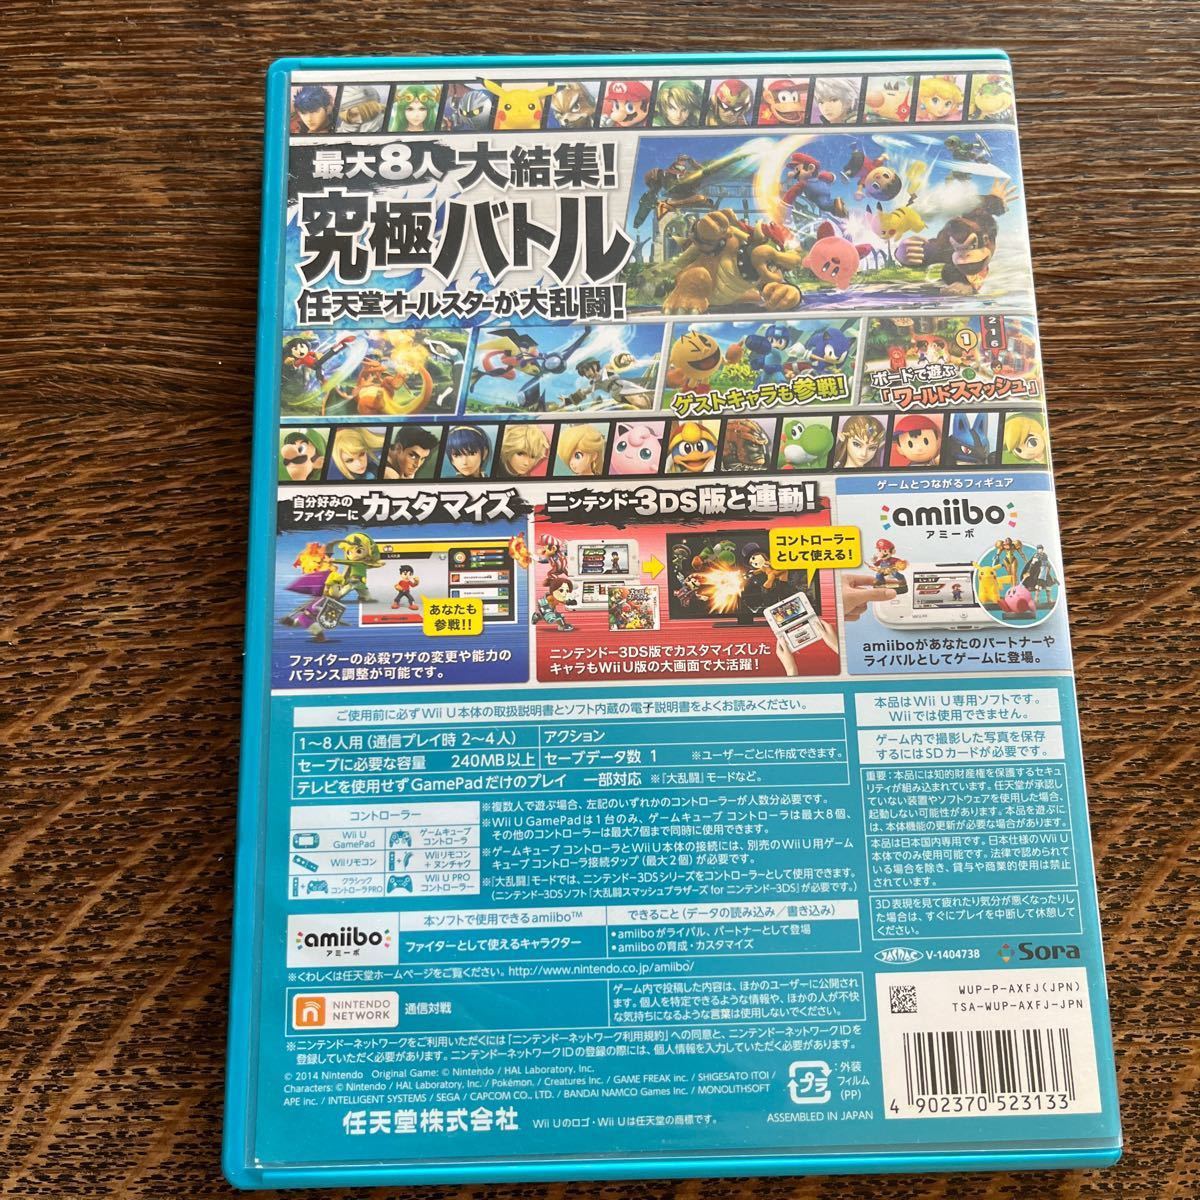 【Wii U】 大乱闘スマッシュブラザーズ for Wii U